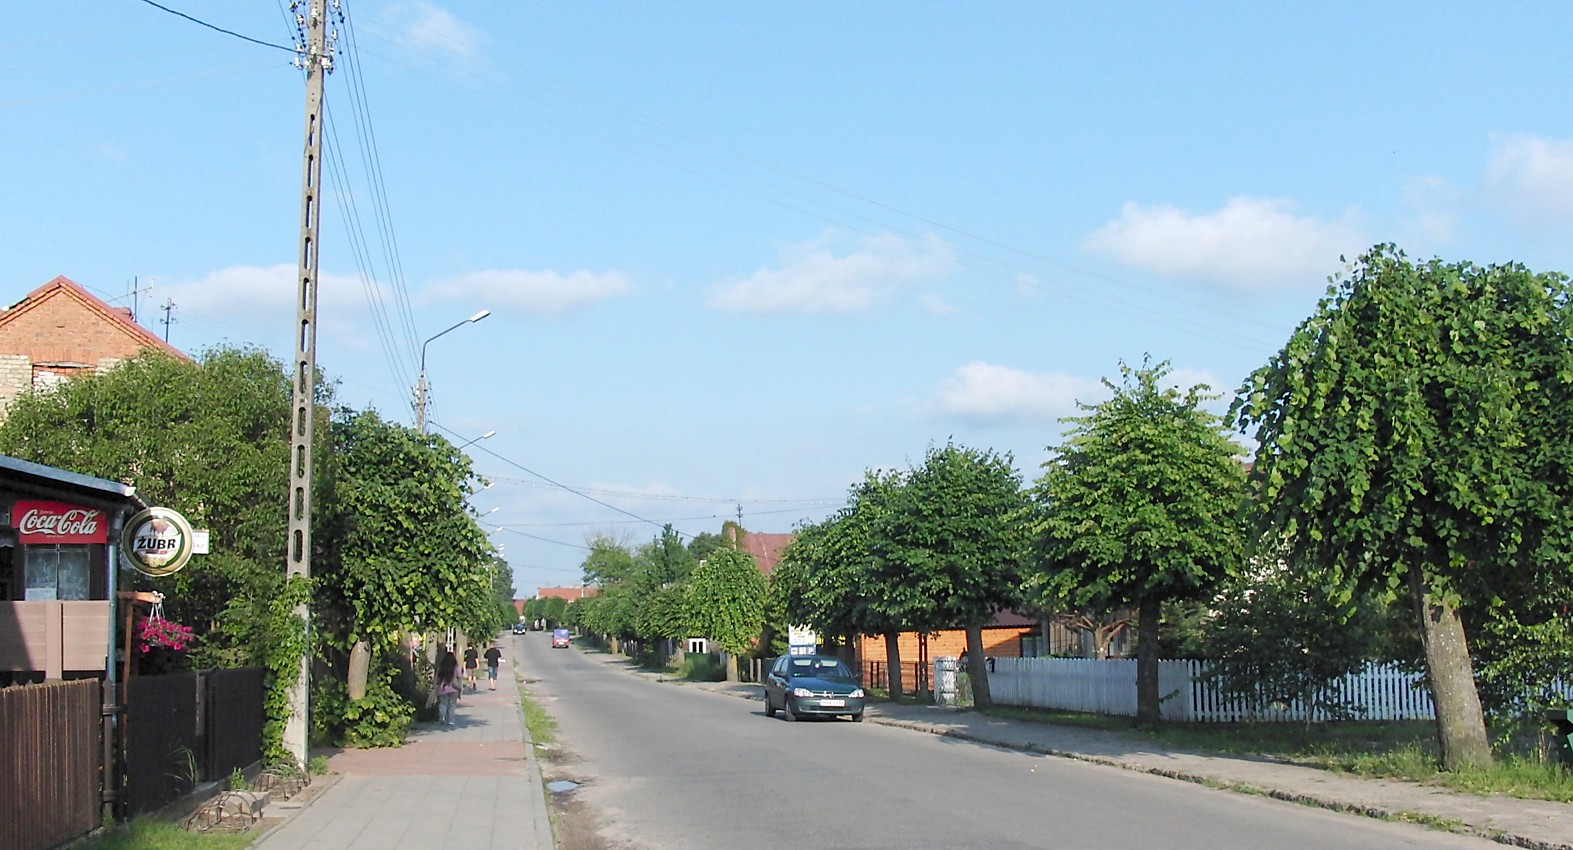 Беловежа, image of landscape/habitat.